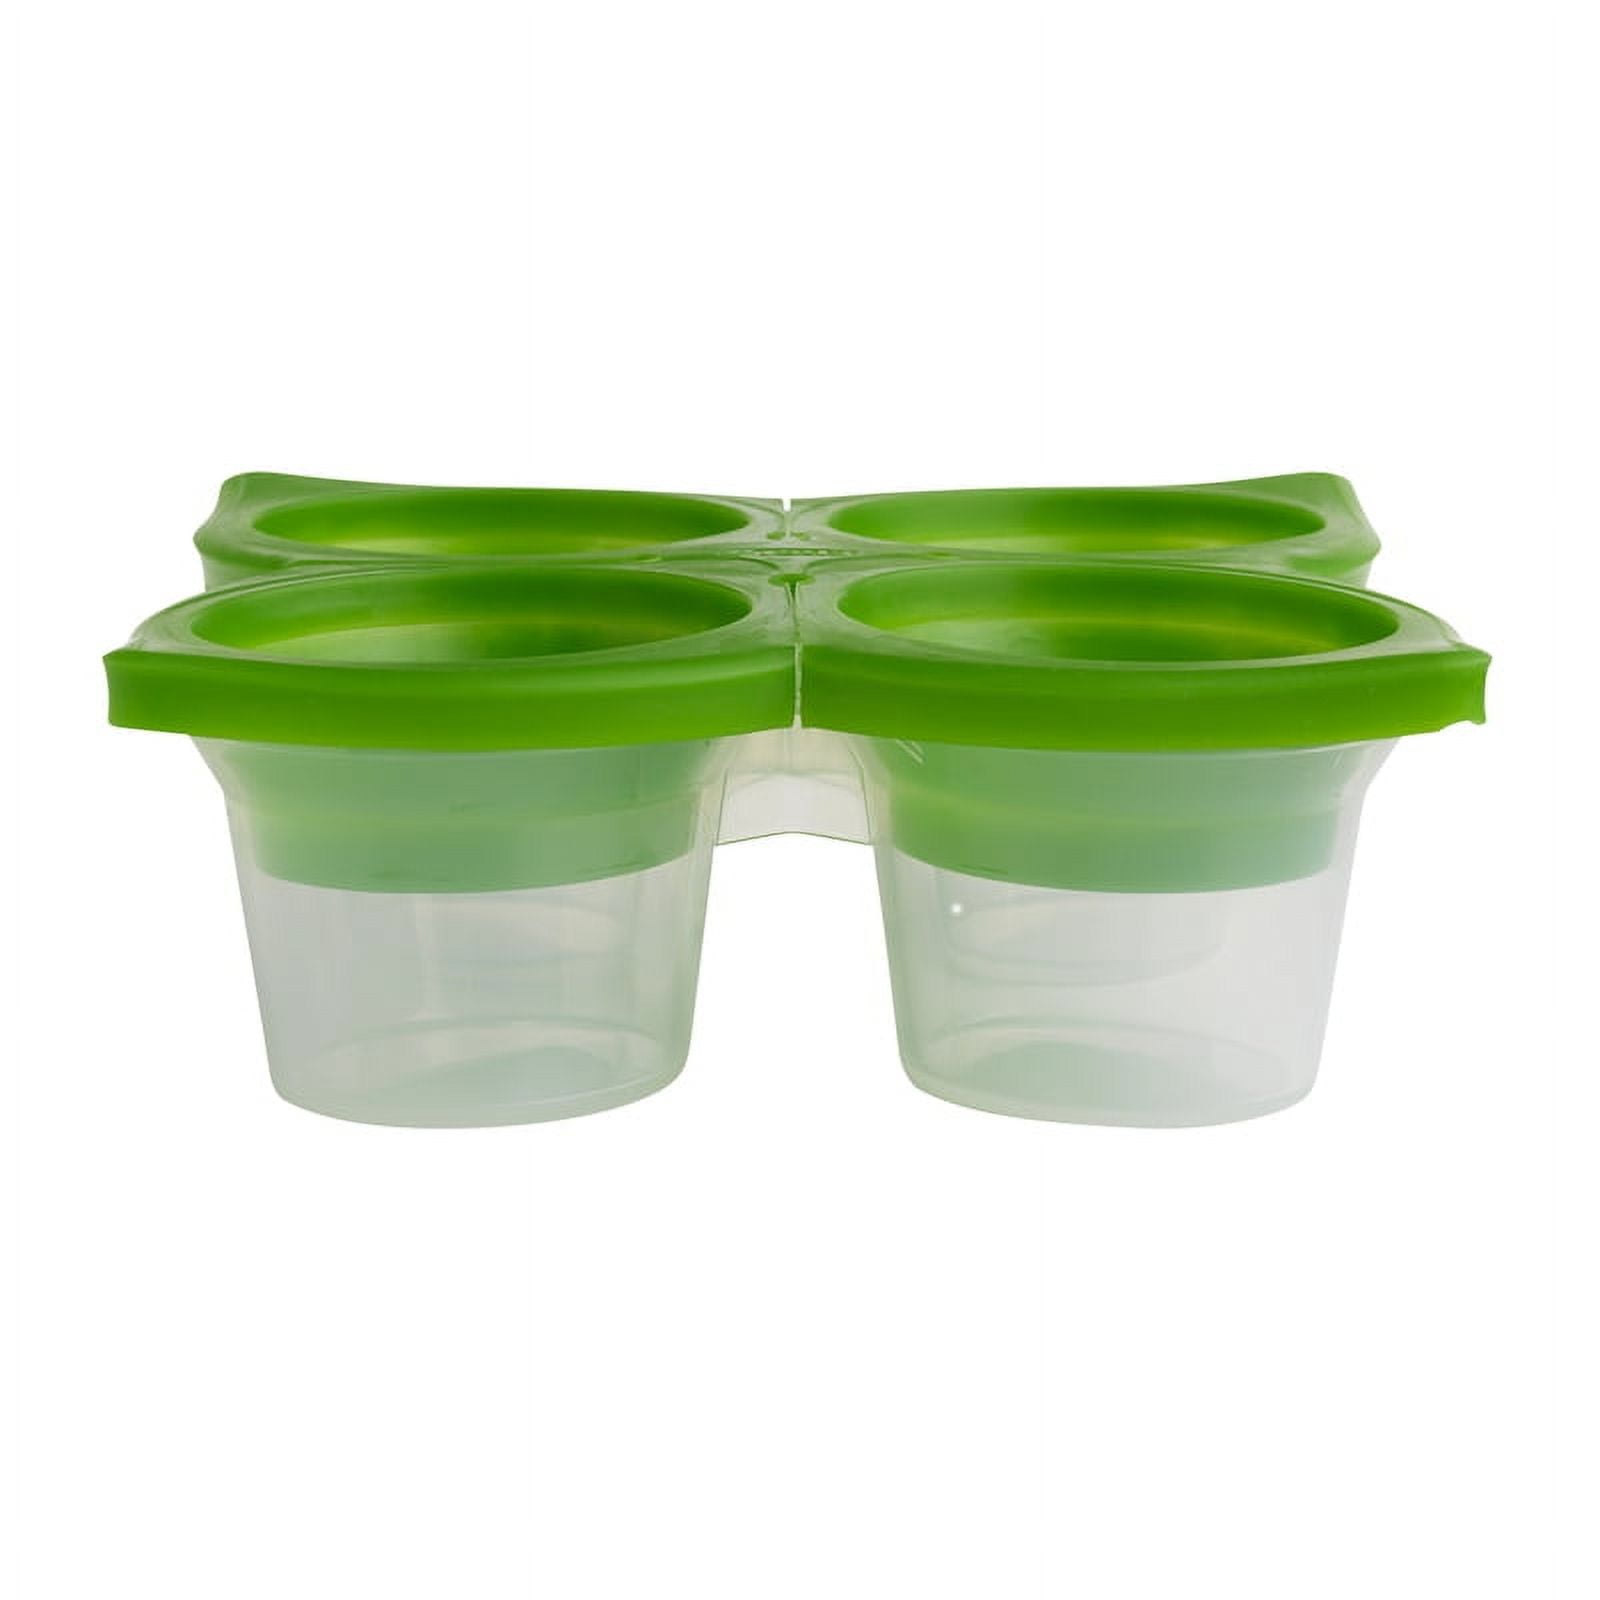 6406508 Spicecube Herb Freezer Tray Plastic - Green